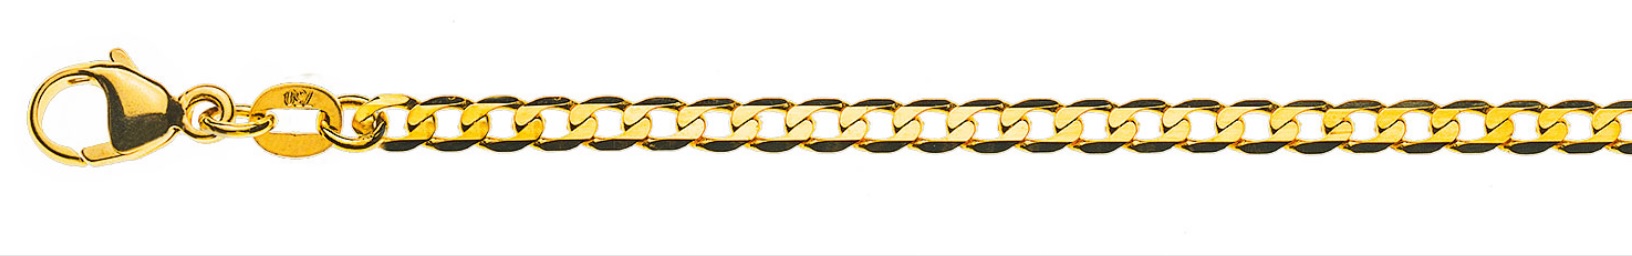 AURONOS Prestige Necklace yellow gold 18K curb chain extra flat diamond 55cm 3.1mm